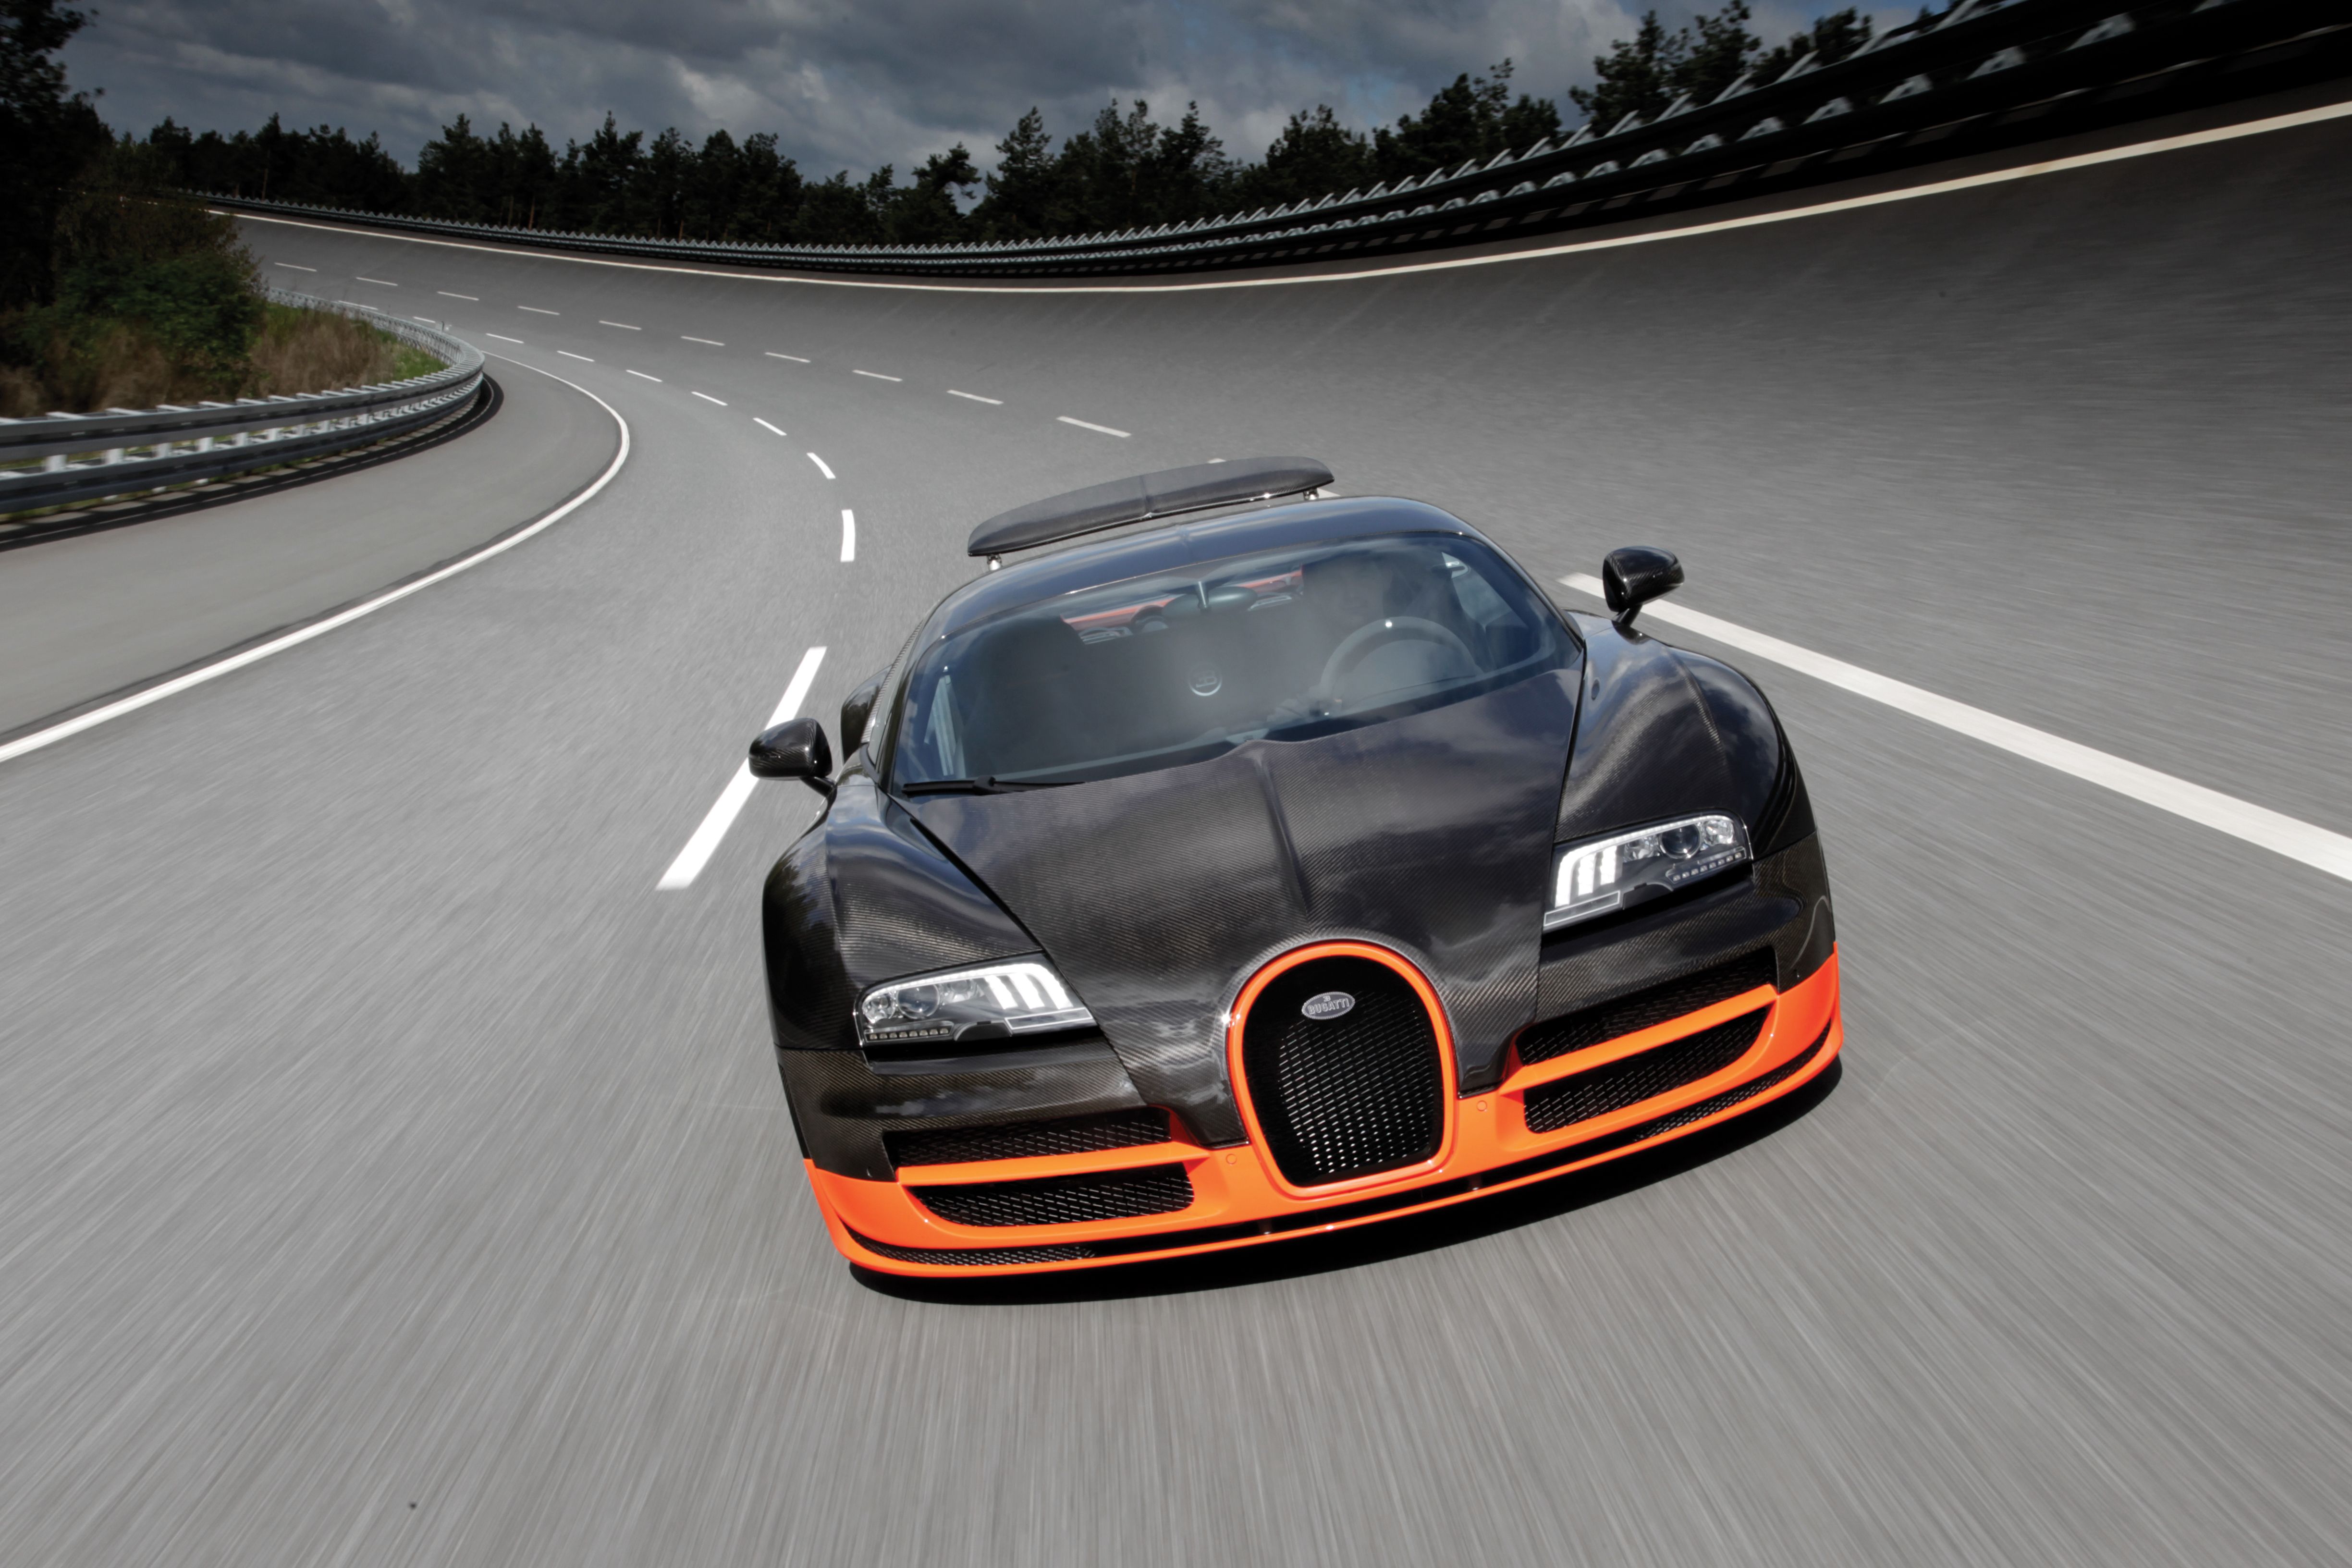 The 2011 Bugatti Veyron on the track.